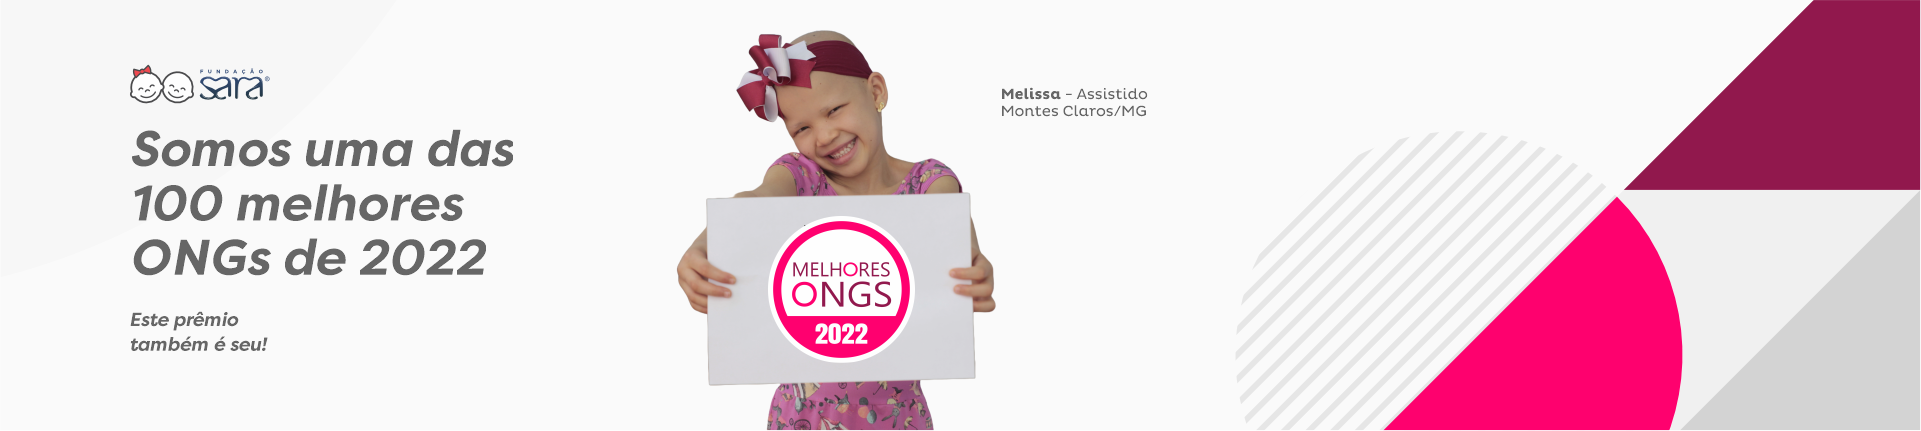 Banner Melhores ONGS 2022